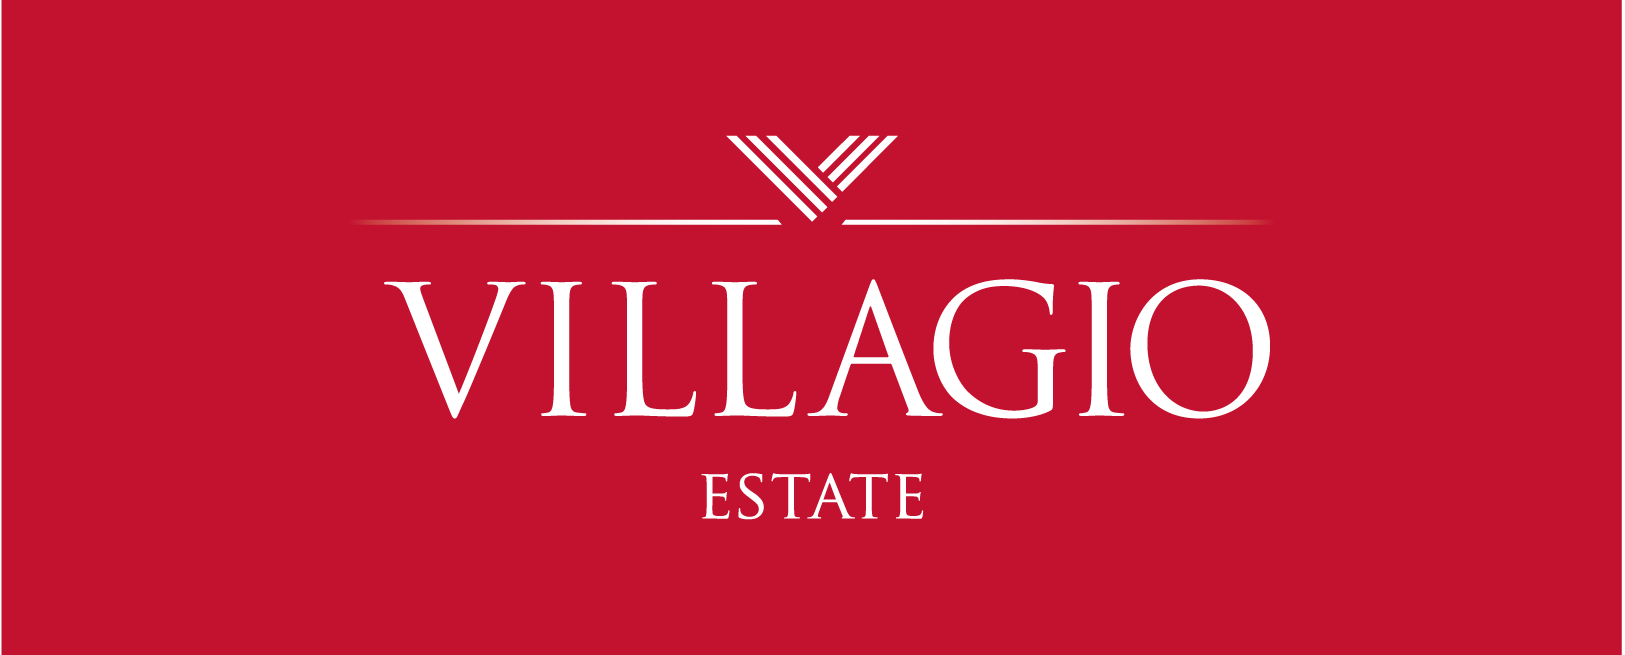 Villagio Estate. Villagio Estate логотип. Villagio Estate офис продаж. Вилладжио Эстейт коттеджный.